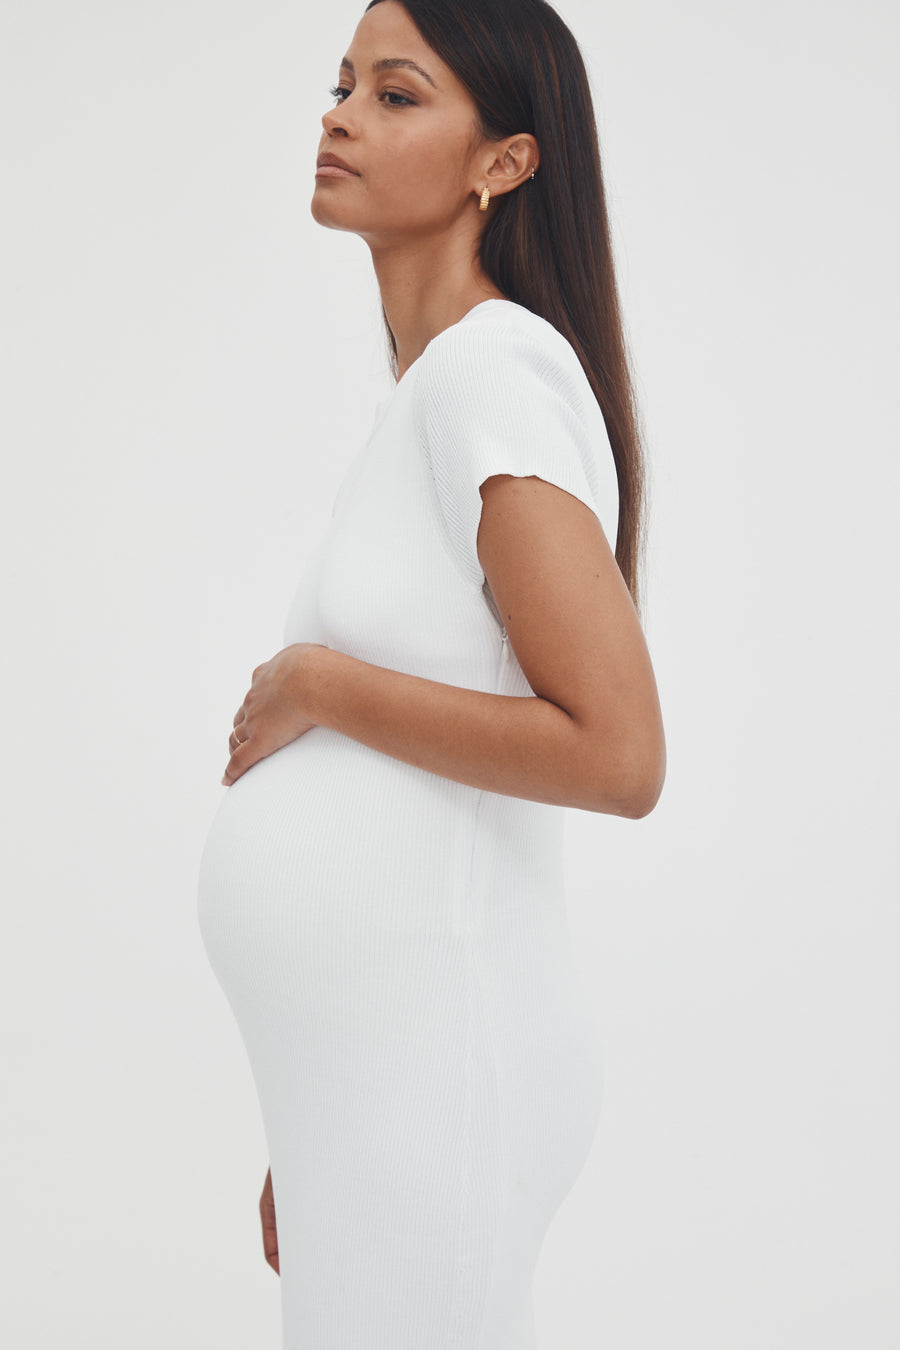 Stylish Babyshower Dress (White) 2